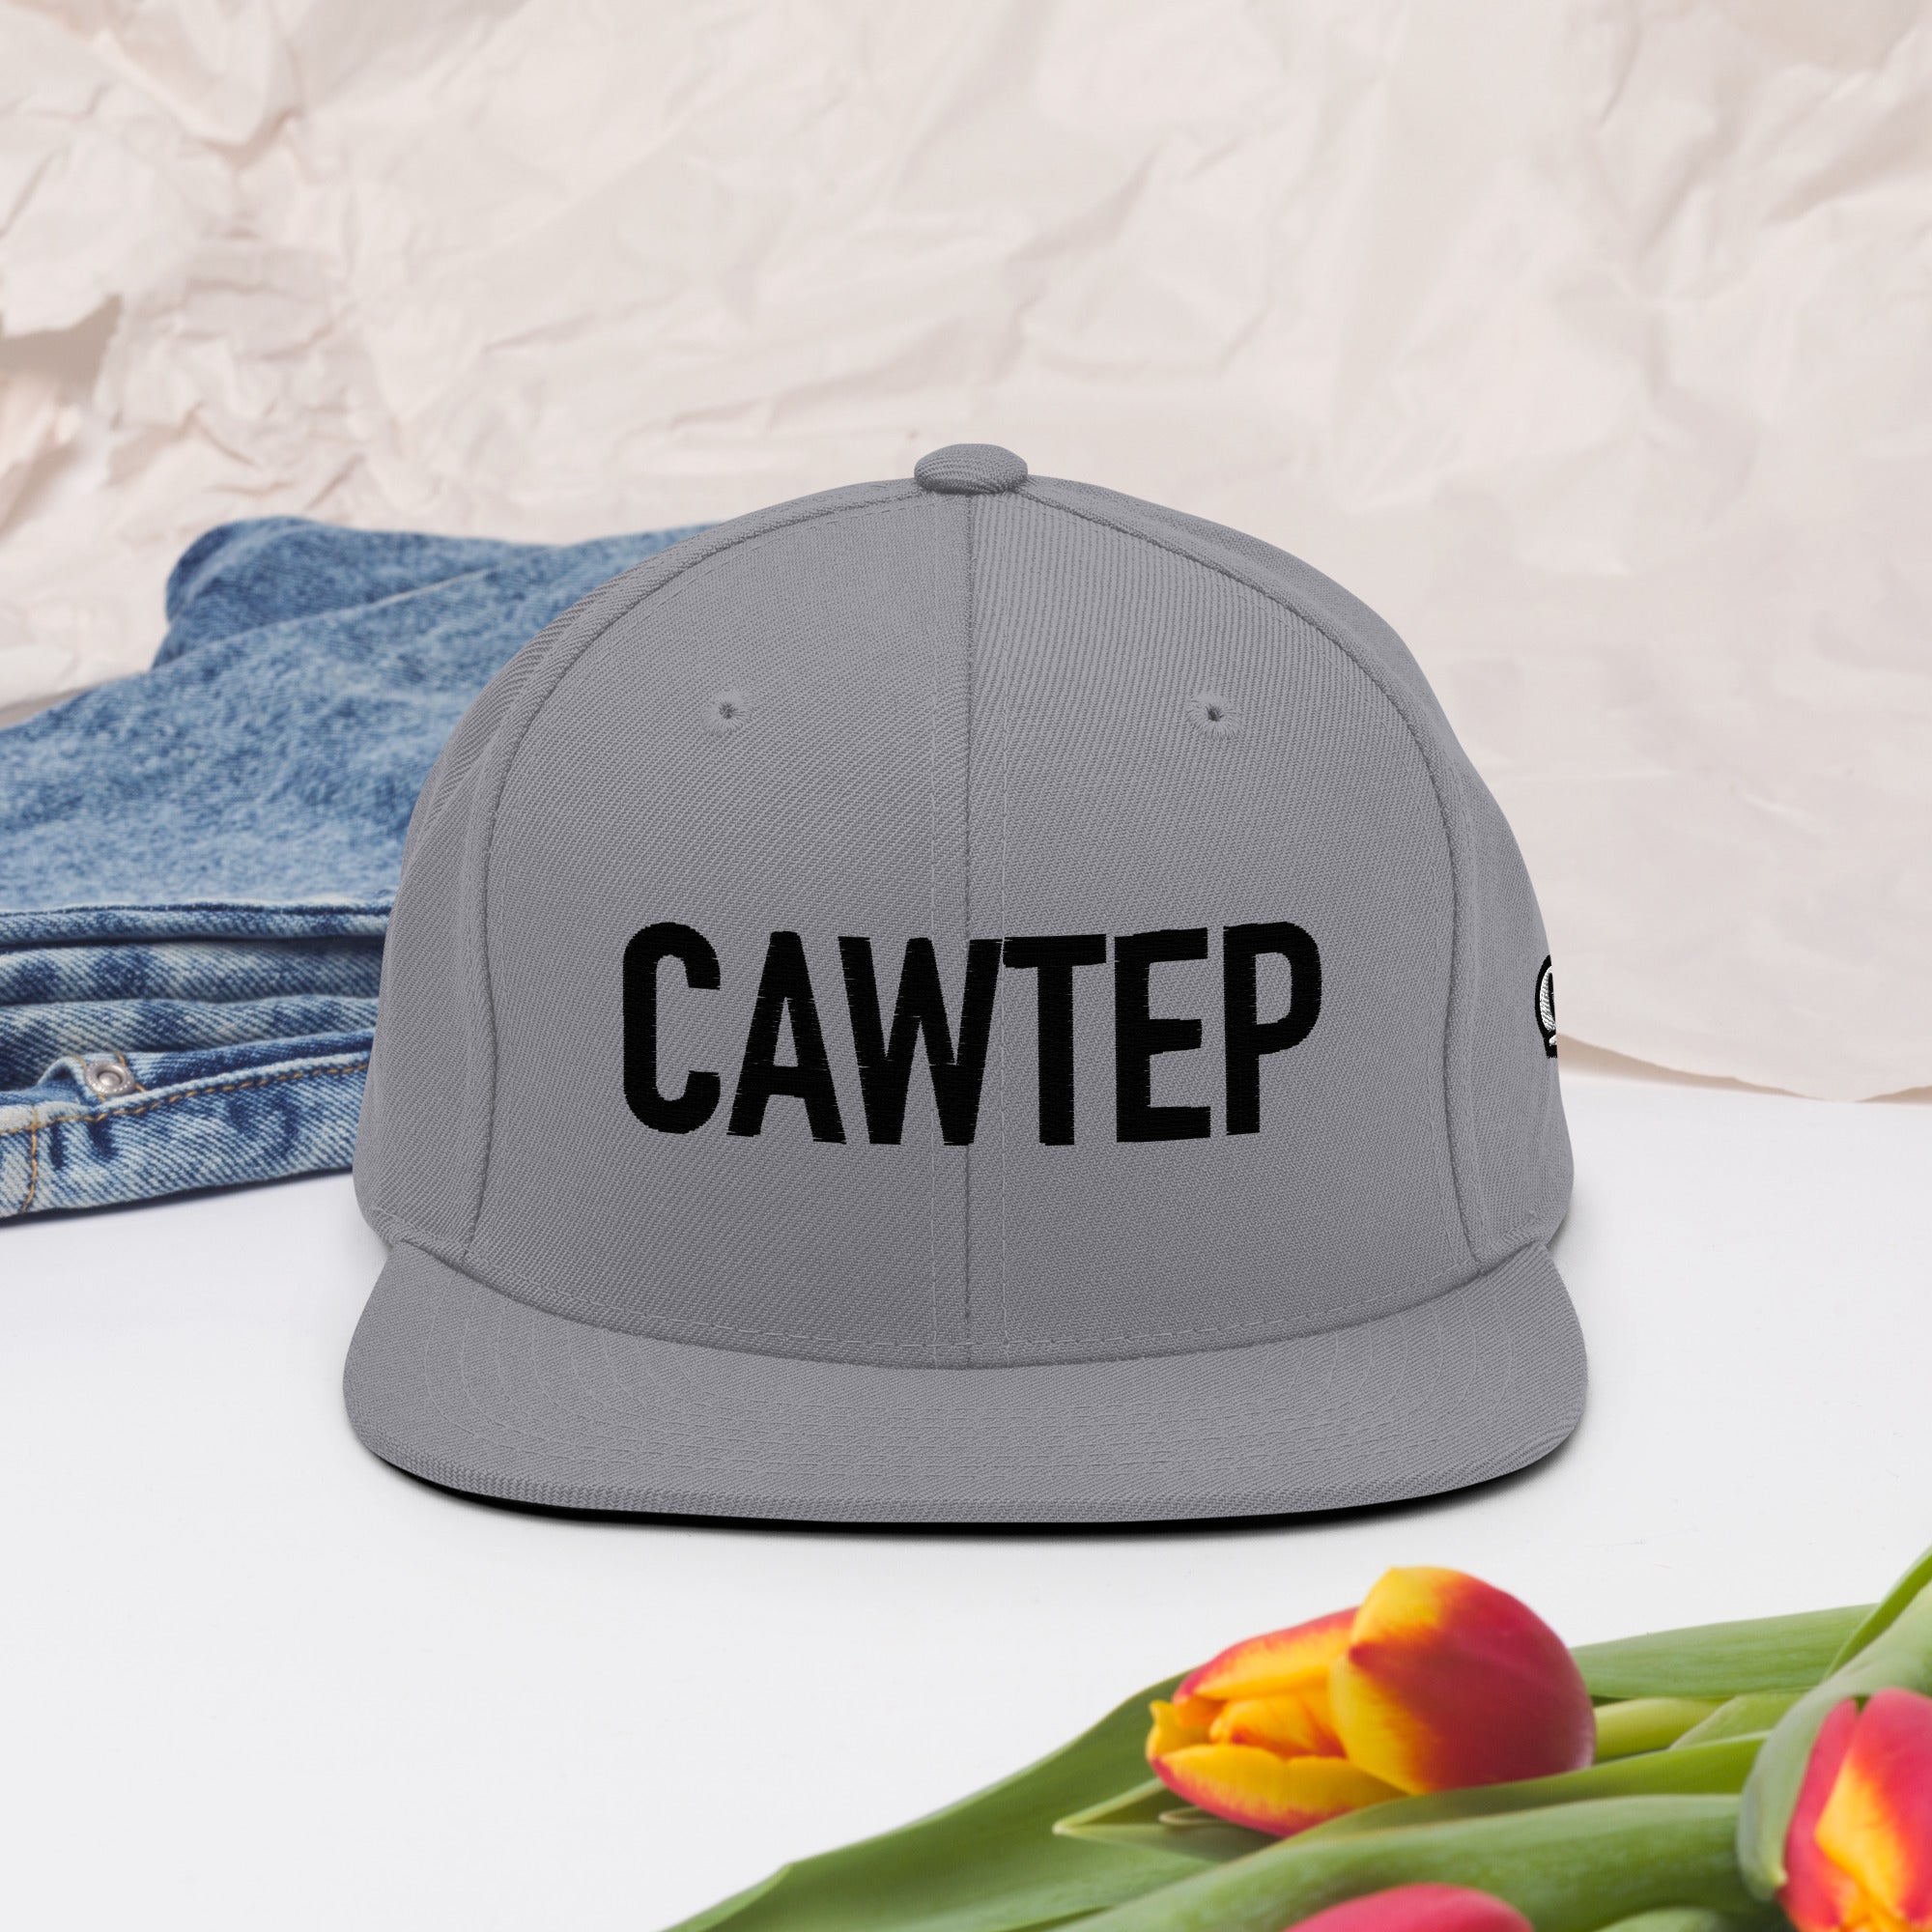 Cawtep Snapback Hat